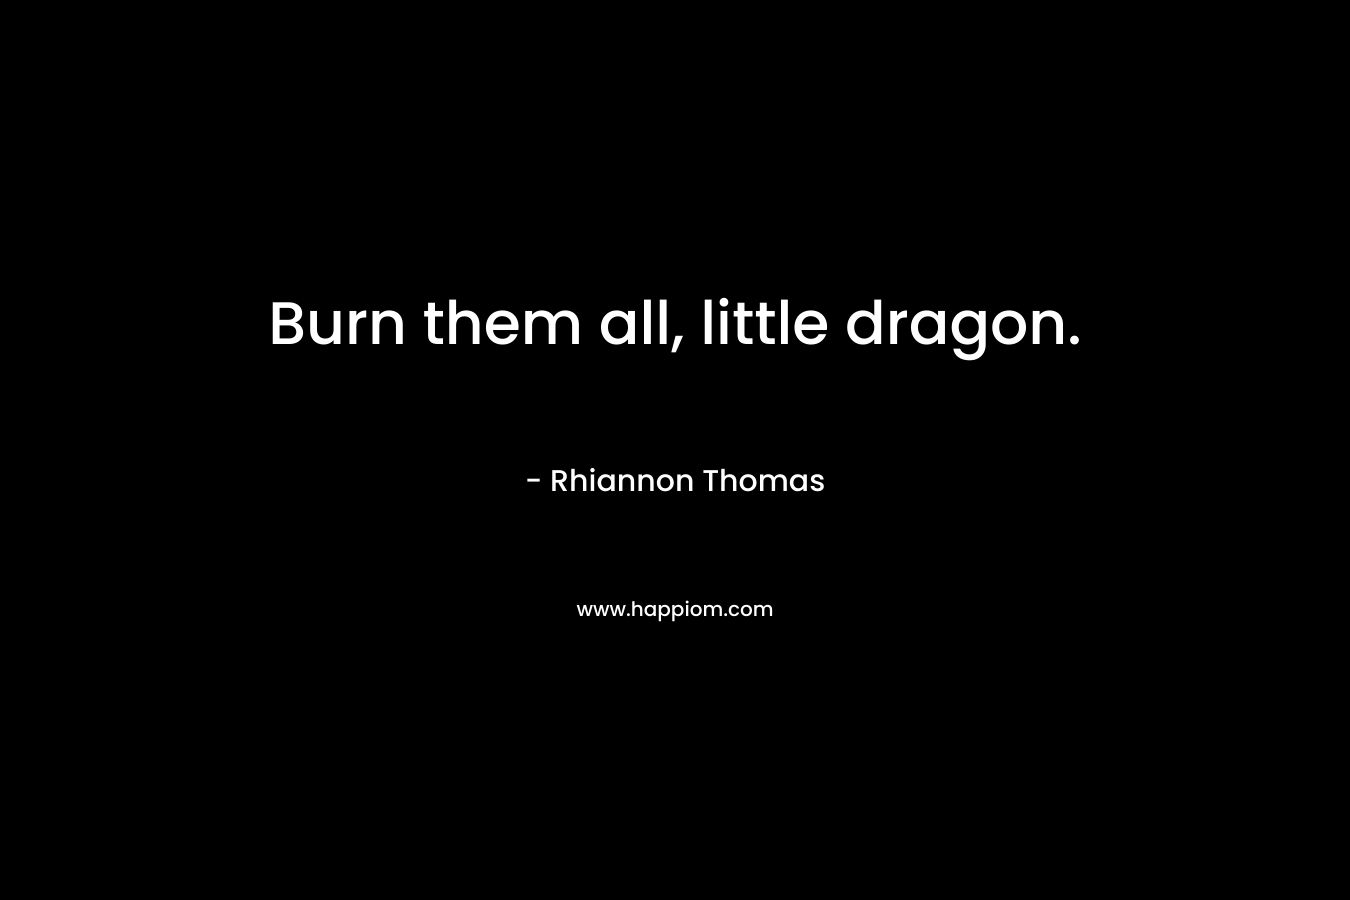 Burn them all, little dragon.